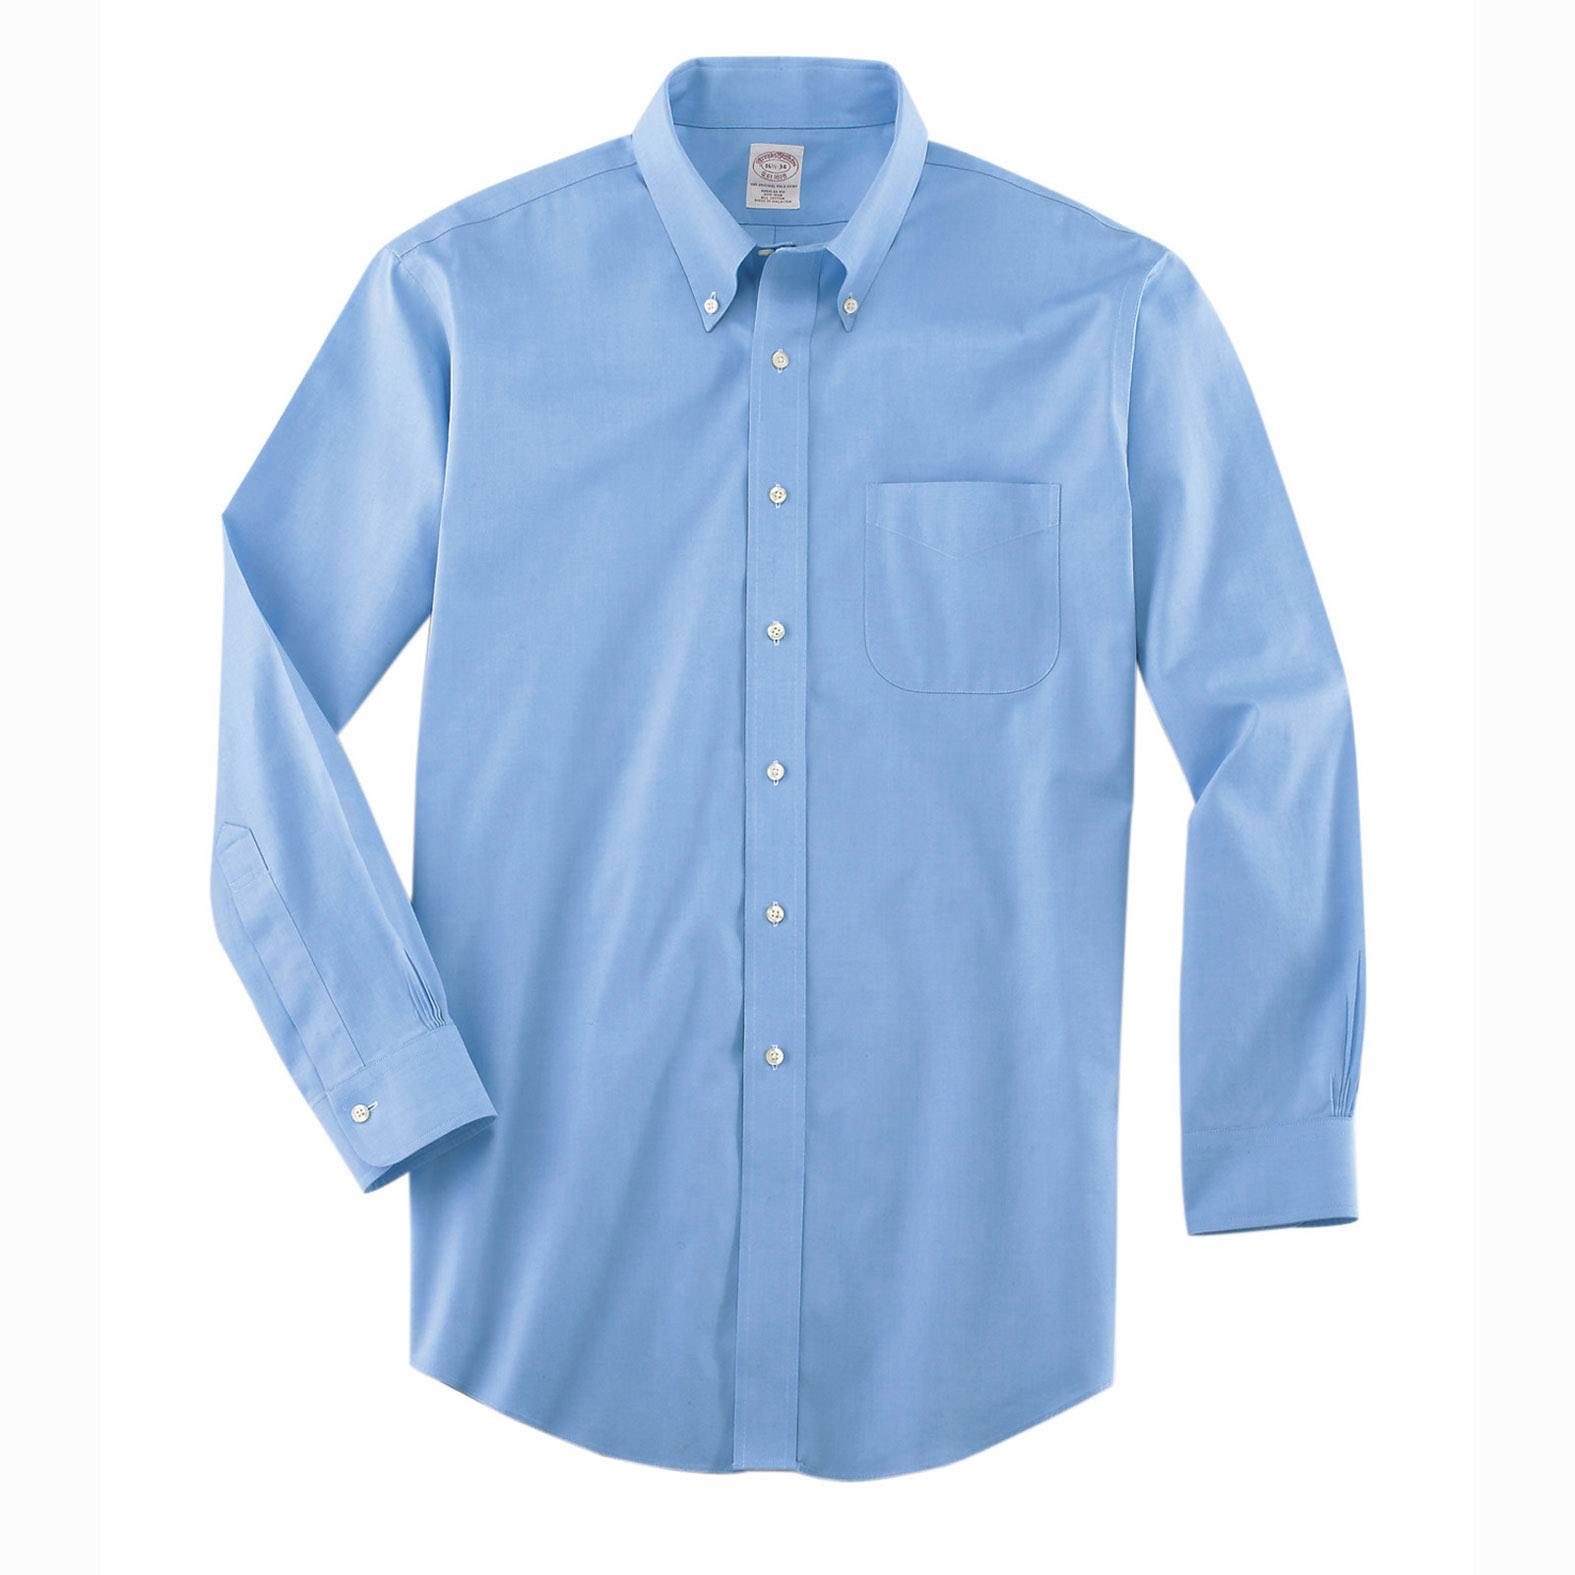 Brooks Brothers Mens 32 33 Inch Sleeve Dress Shirt   Design Online